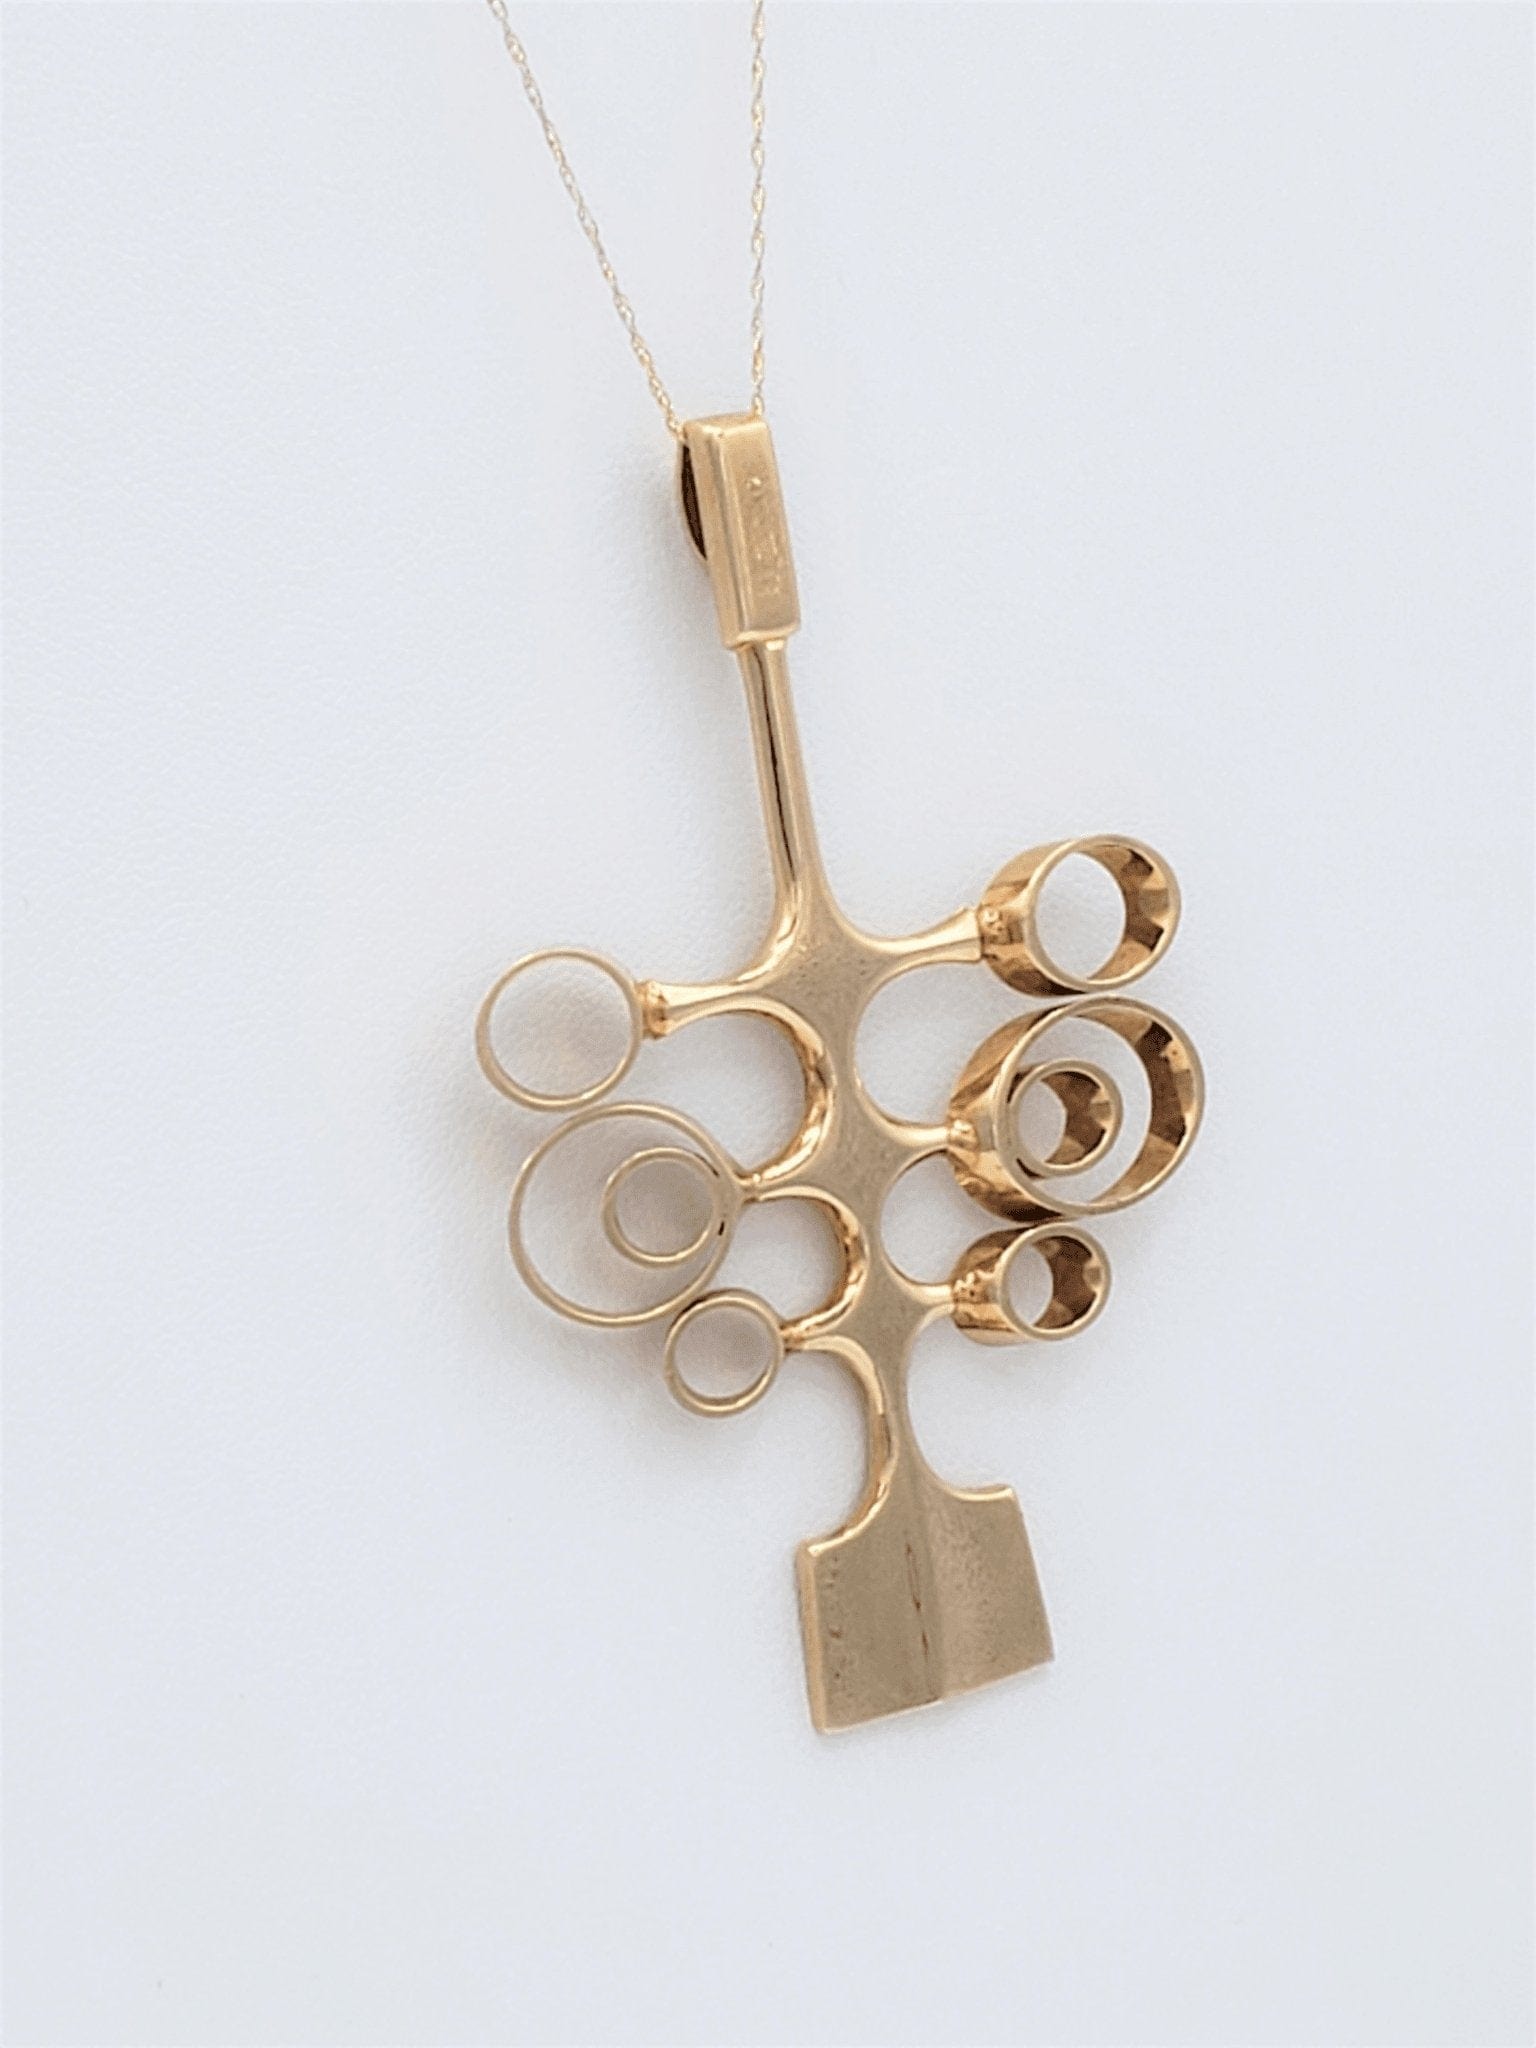 David Andersen Jewelry SUPERB Estate David Andersen Solid 14k/585 Gold Modernist Necklace RARE OOAK